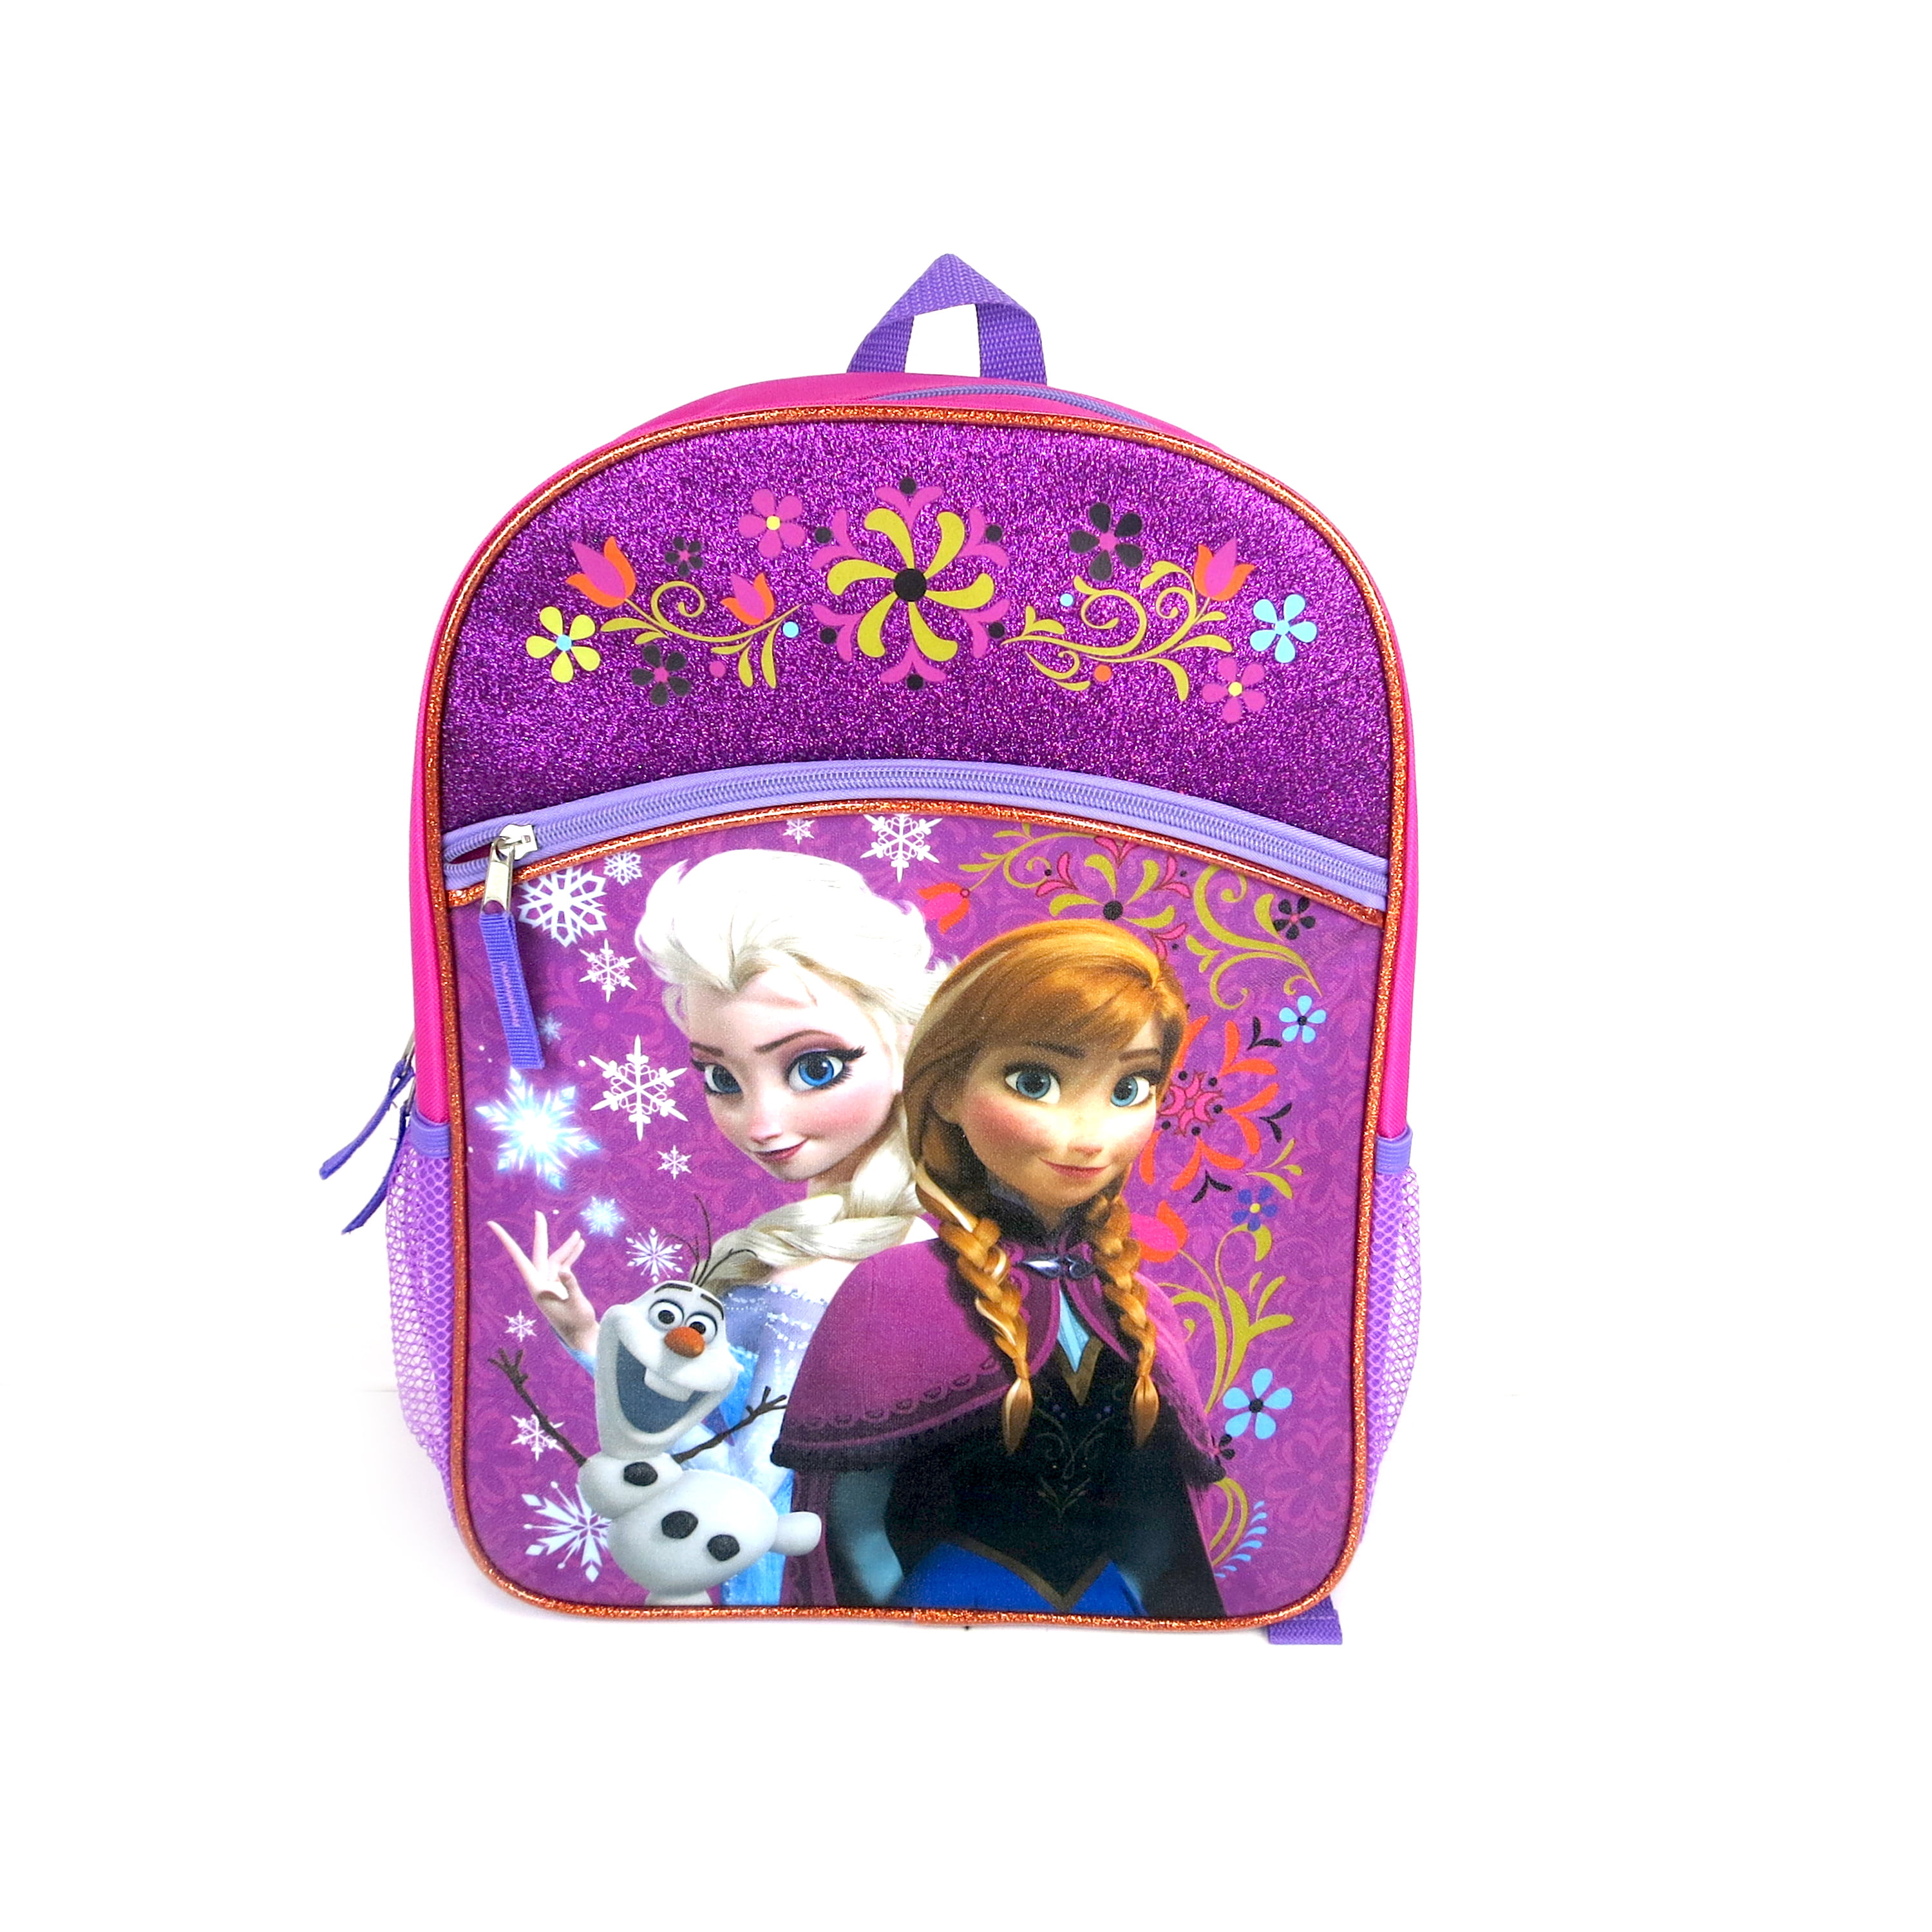 Hot Pink Disney Frozen Anna Elsa Drawstring Backpack Girl's Child School Gym Bag 